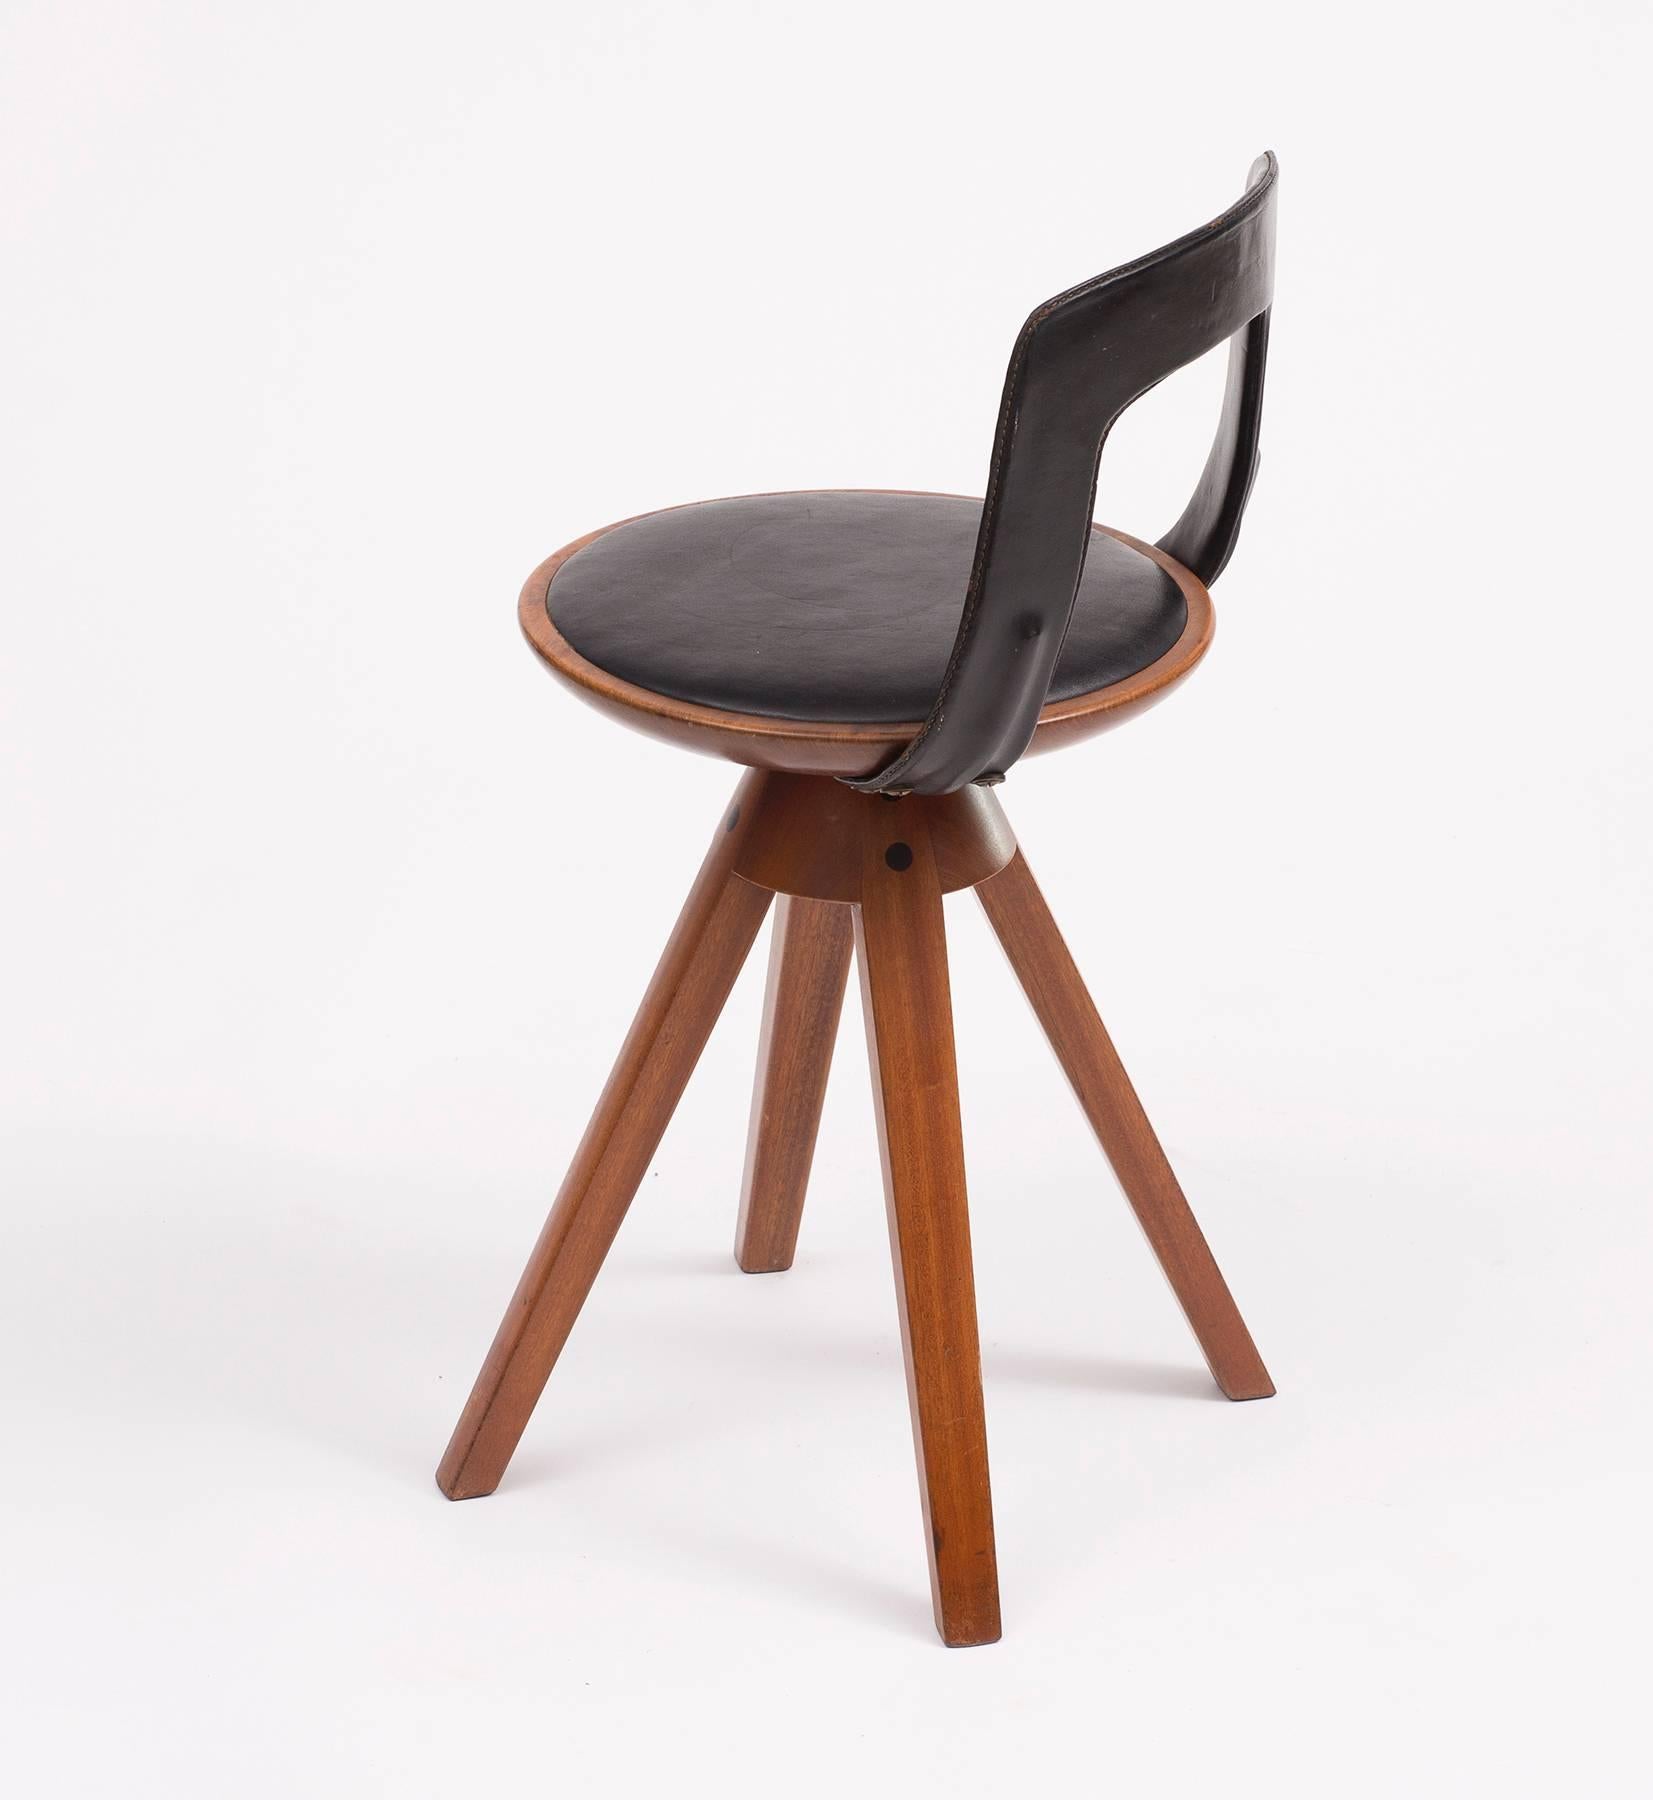 A swivel stool in teak and original black leather designed by Tove and Edvard Kindt-Larsen for Thorald Madsens Snedkeri, Denmark, 1957.